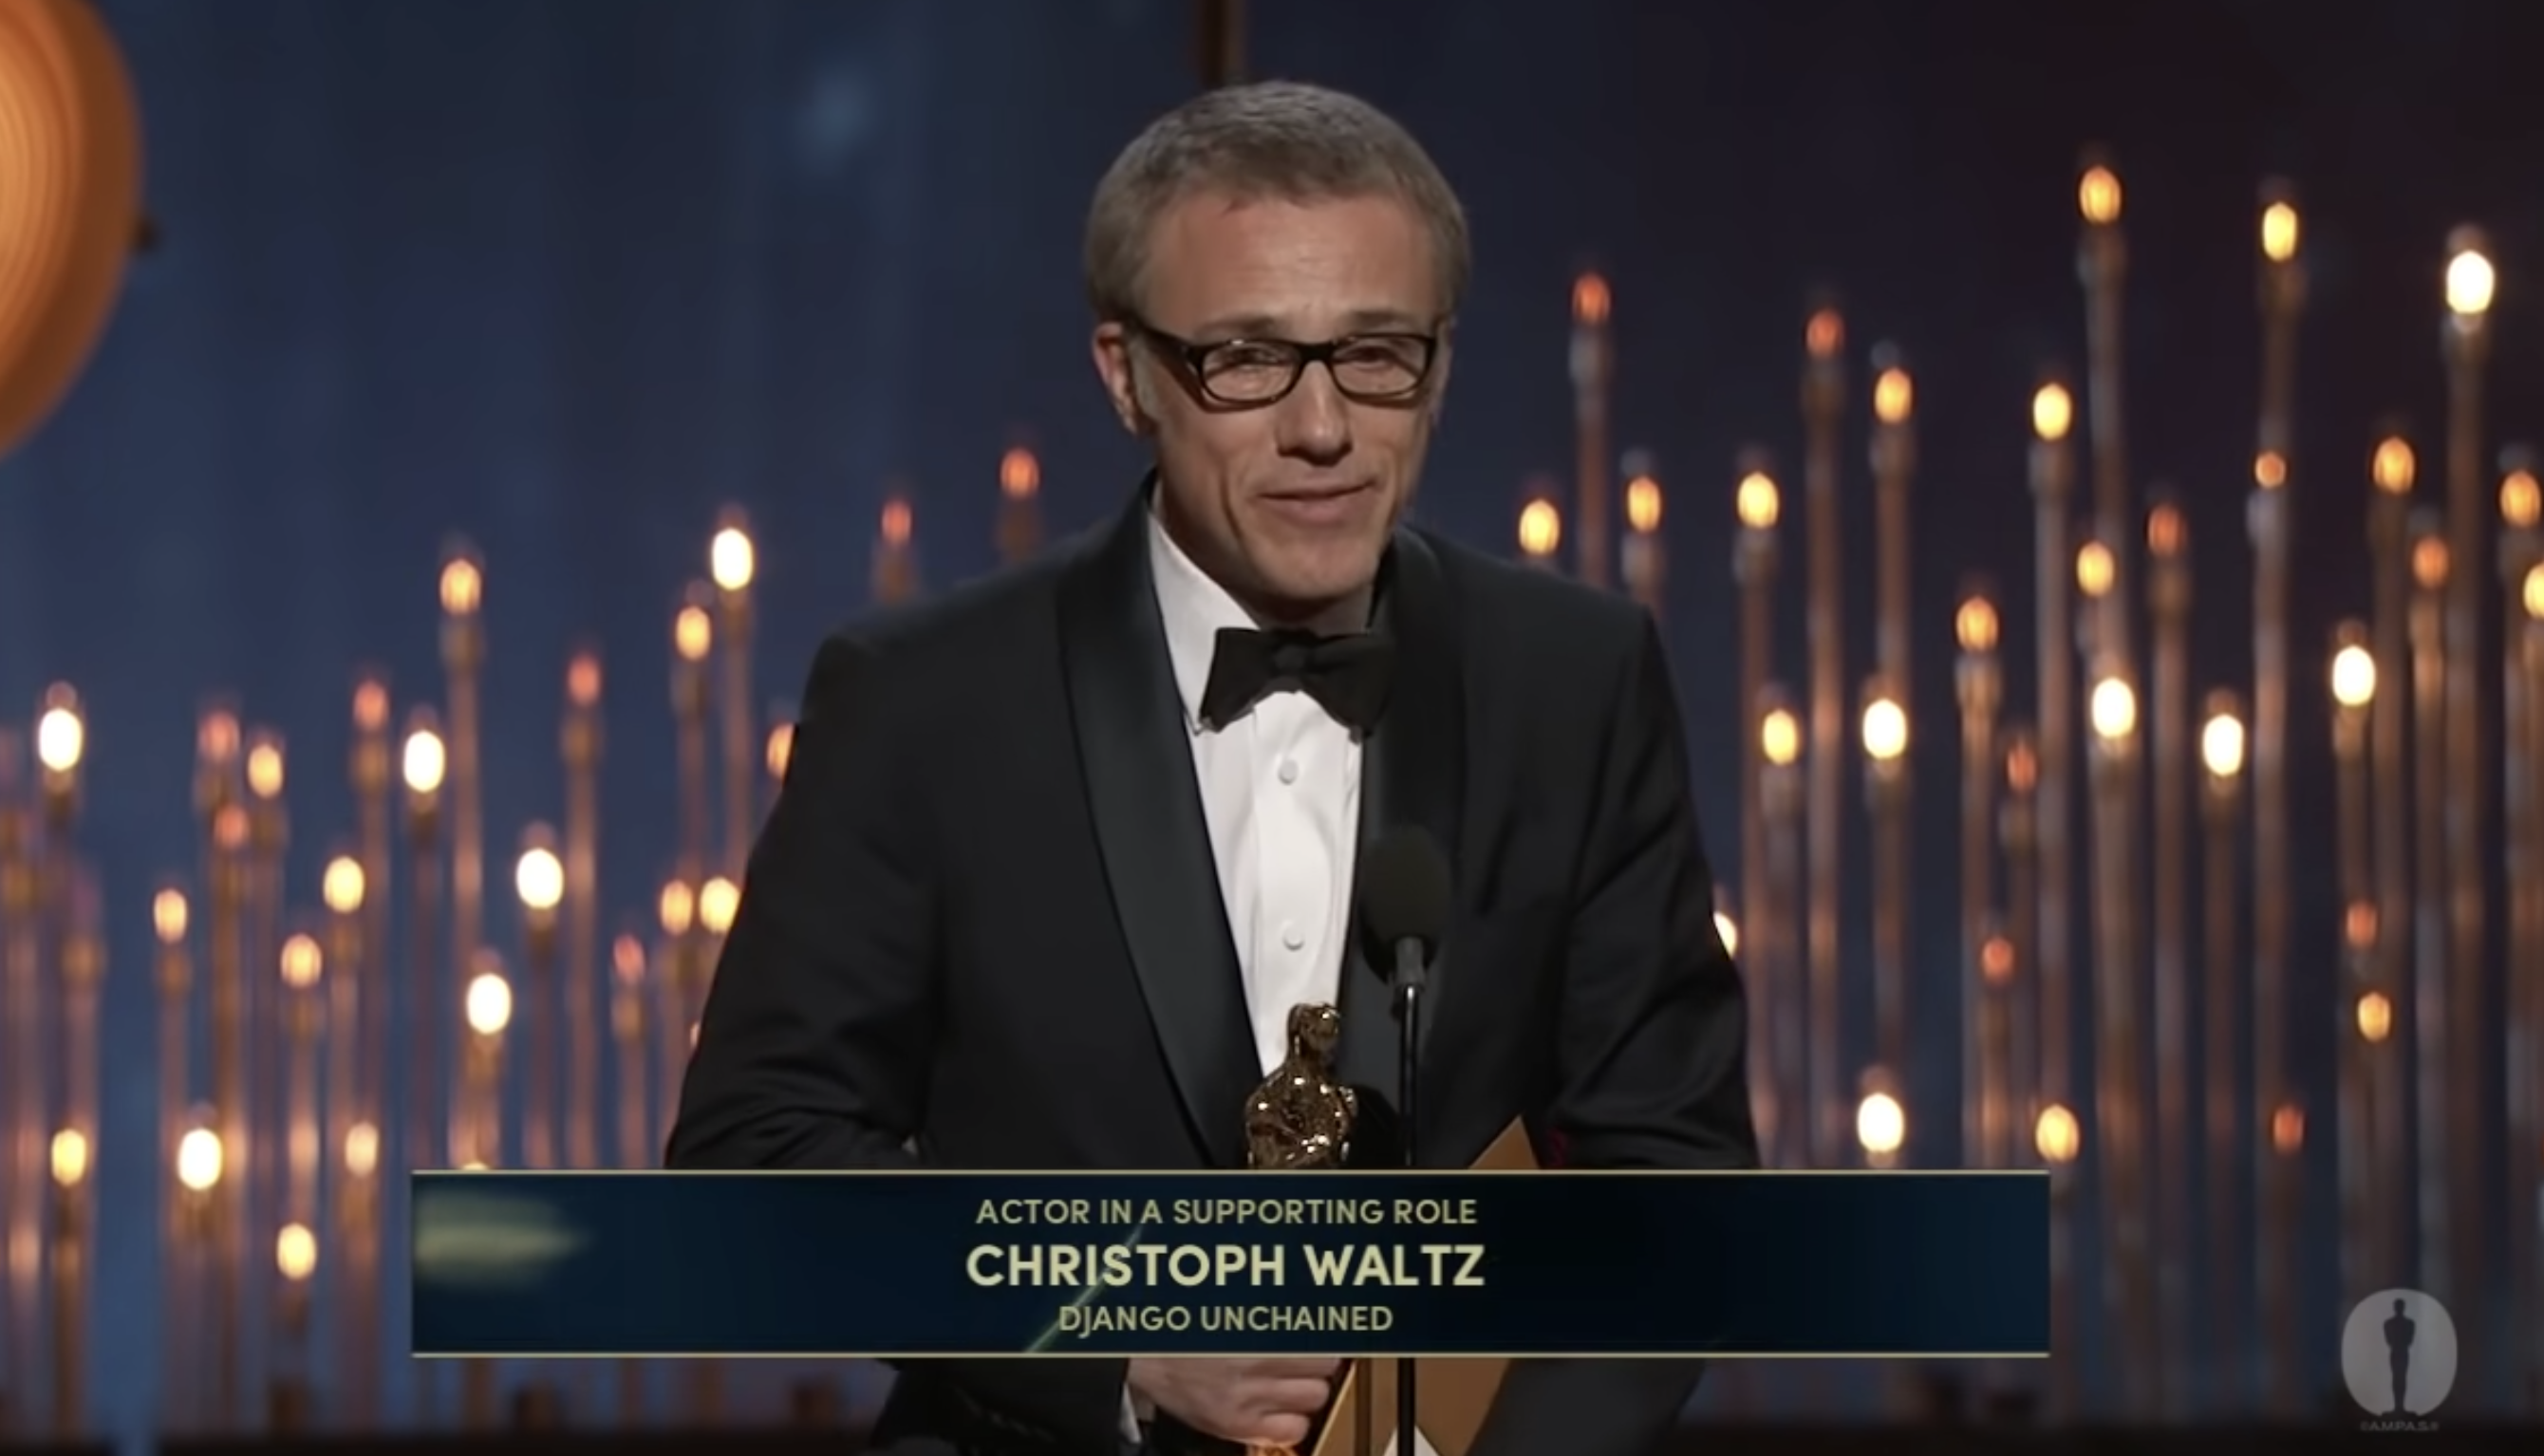 Christoph accepting his Oscar